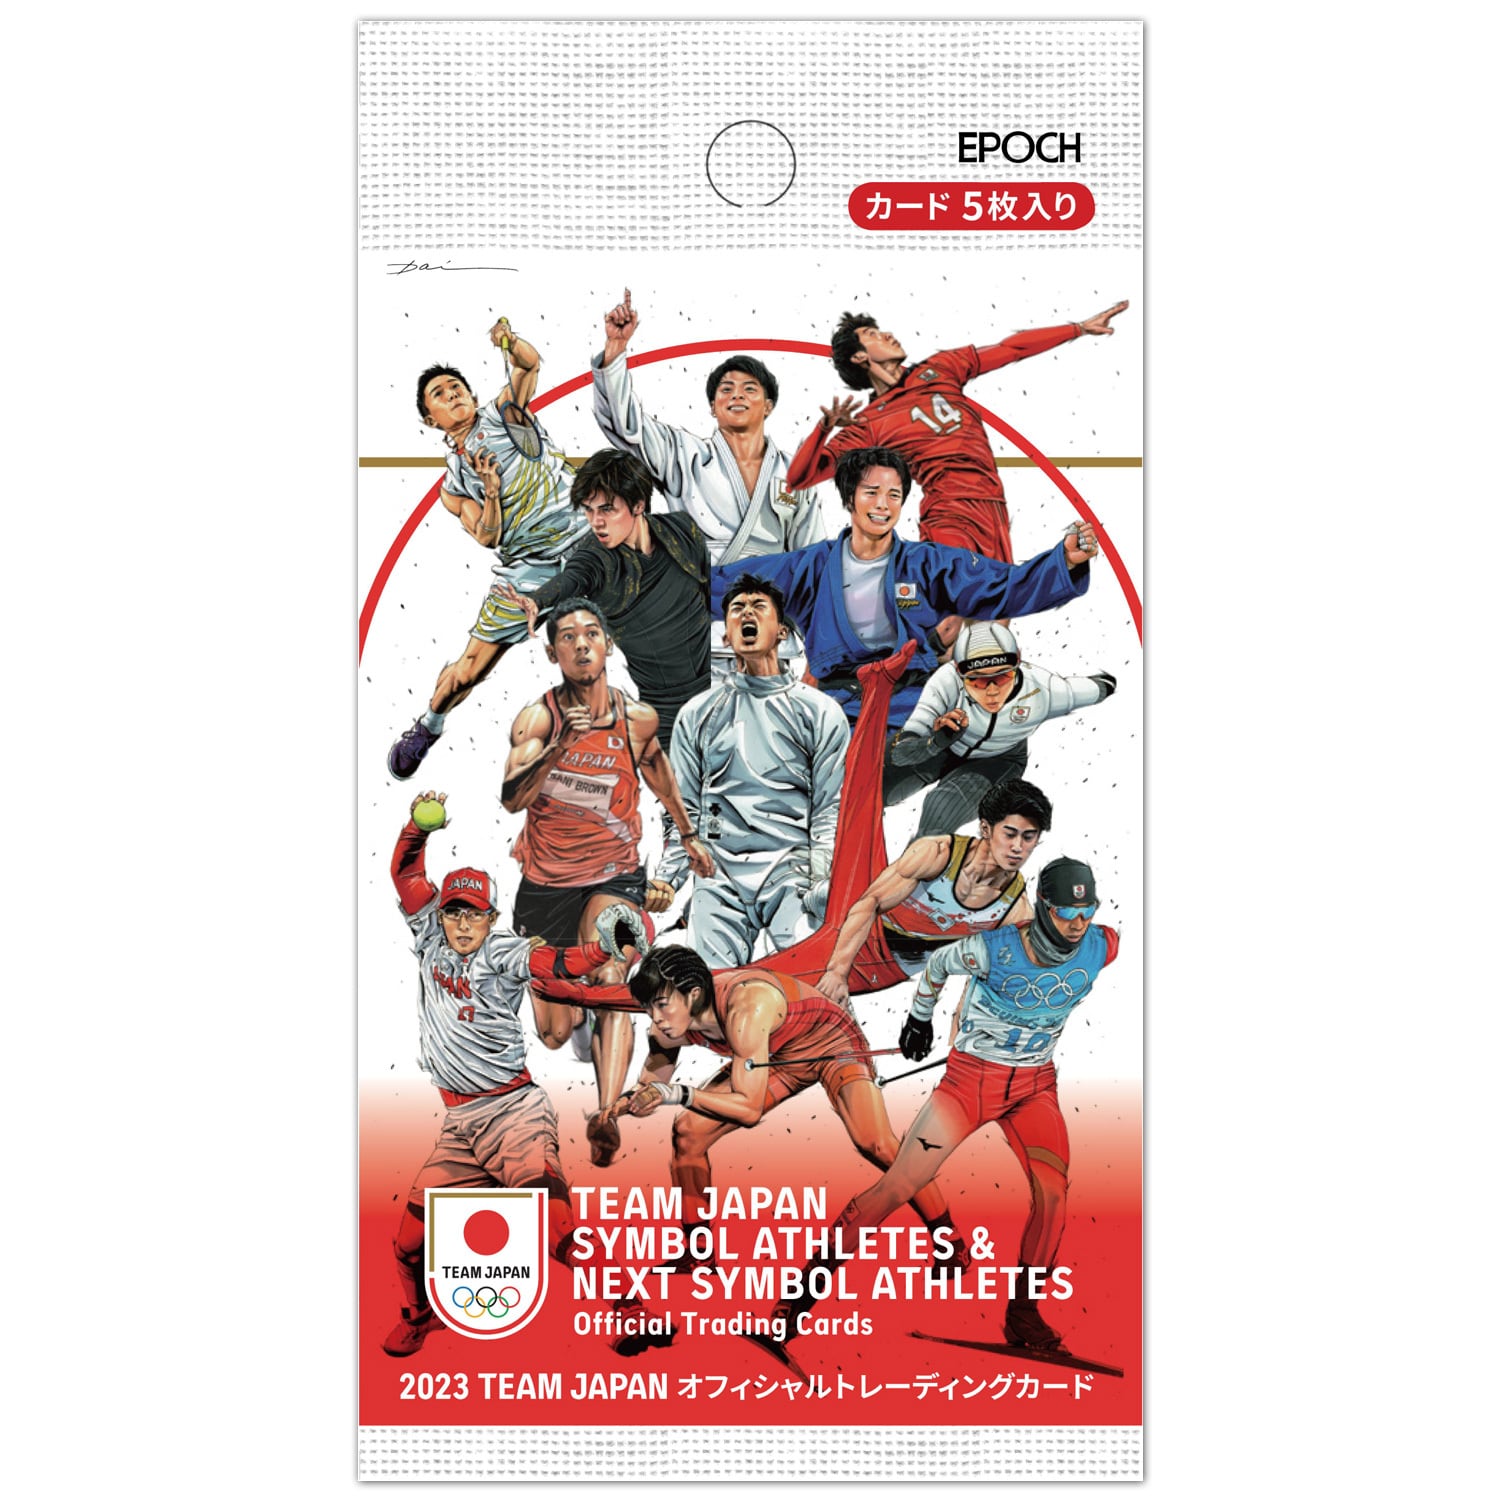 2023 TEAM JAPAN オフィシャルトレーディングカードSYMBOL ATHLETES & NEXT SYMBOL ATHLETES パック  | チームジャパンオフィシャルオンラインショップ